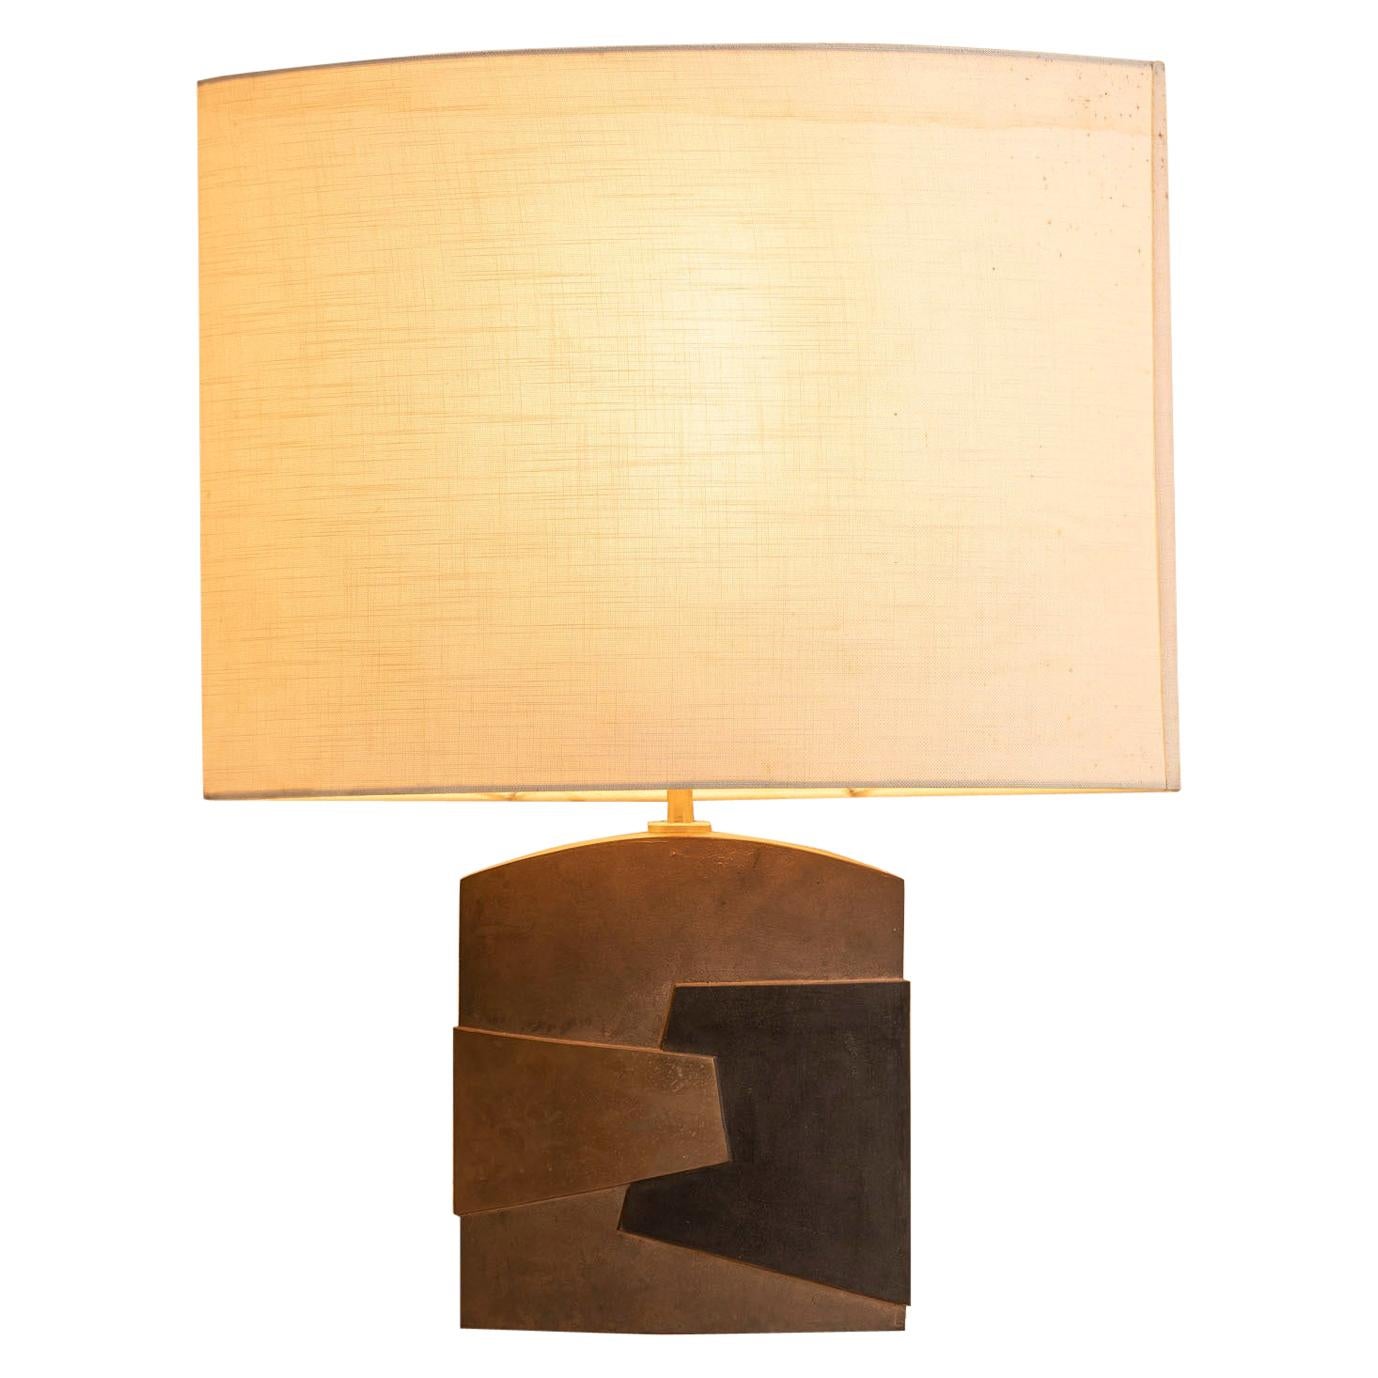 Table Lamp "Airone" by Esa Fedrigolli